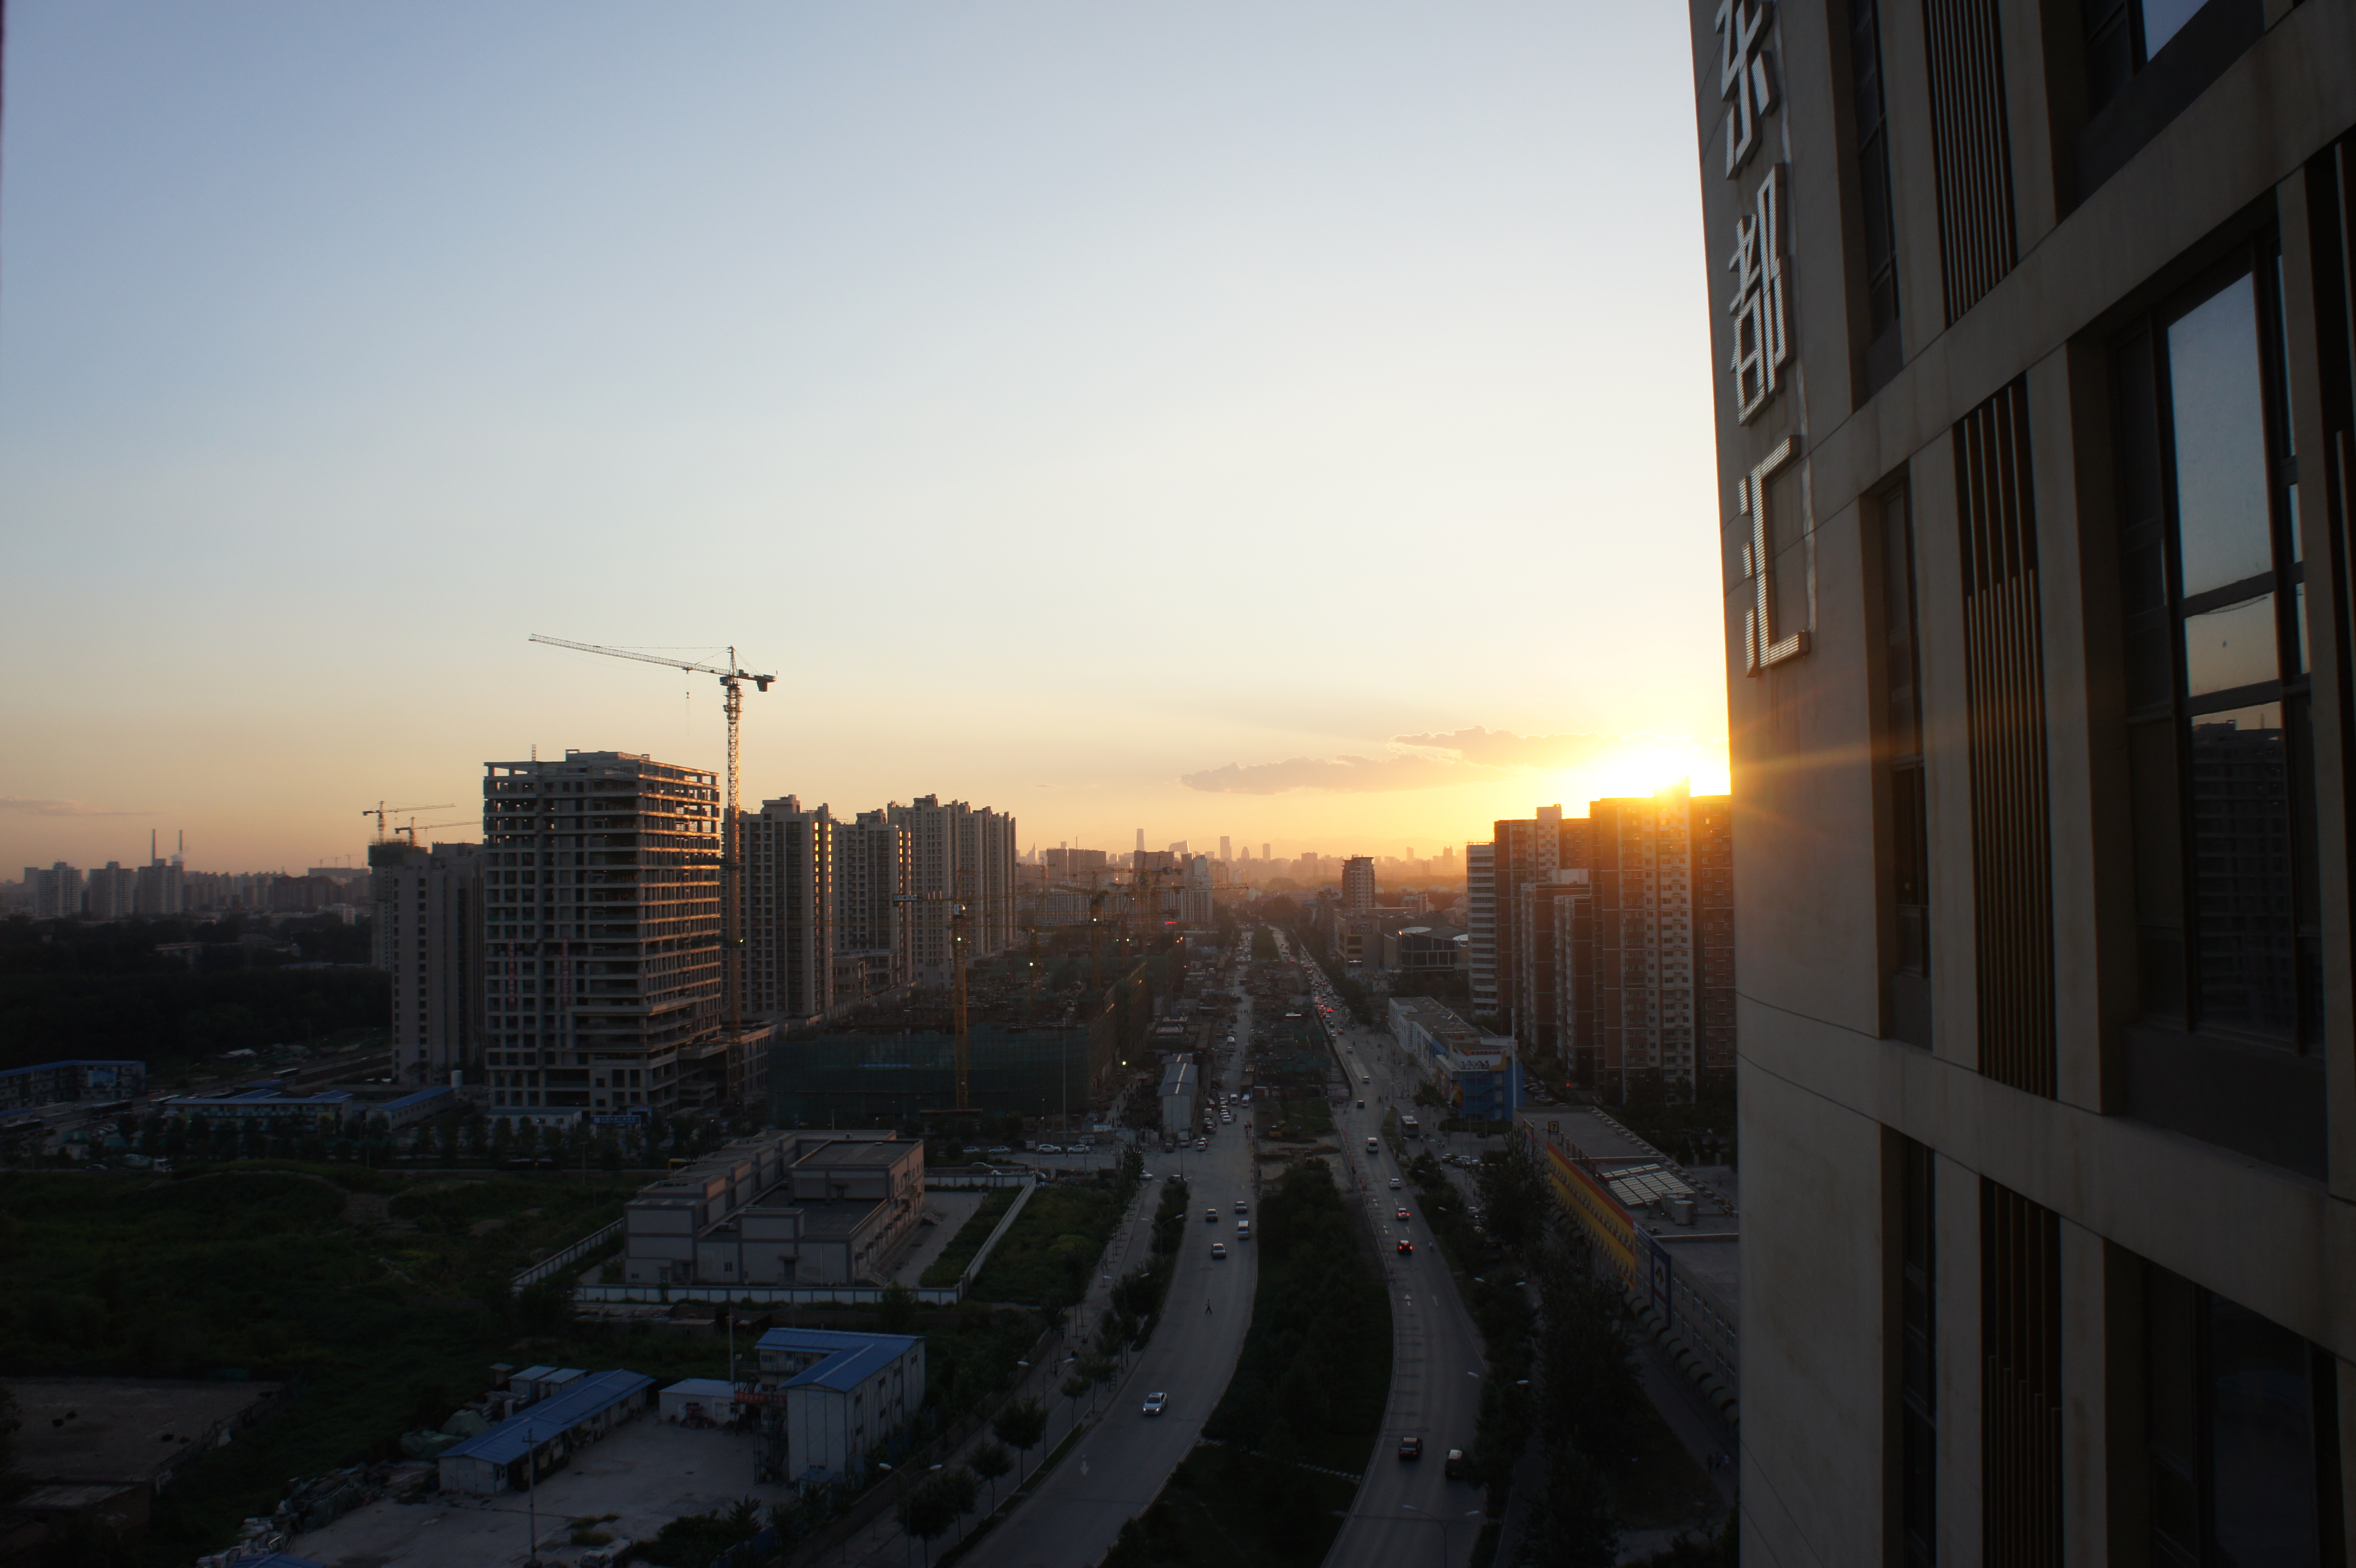 General 4592x3056 city urban building cranes (machine) Beijing China